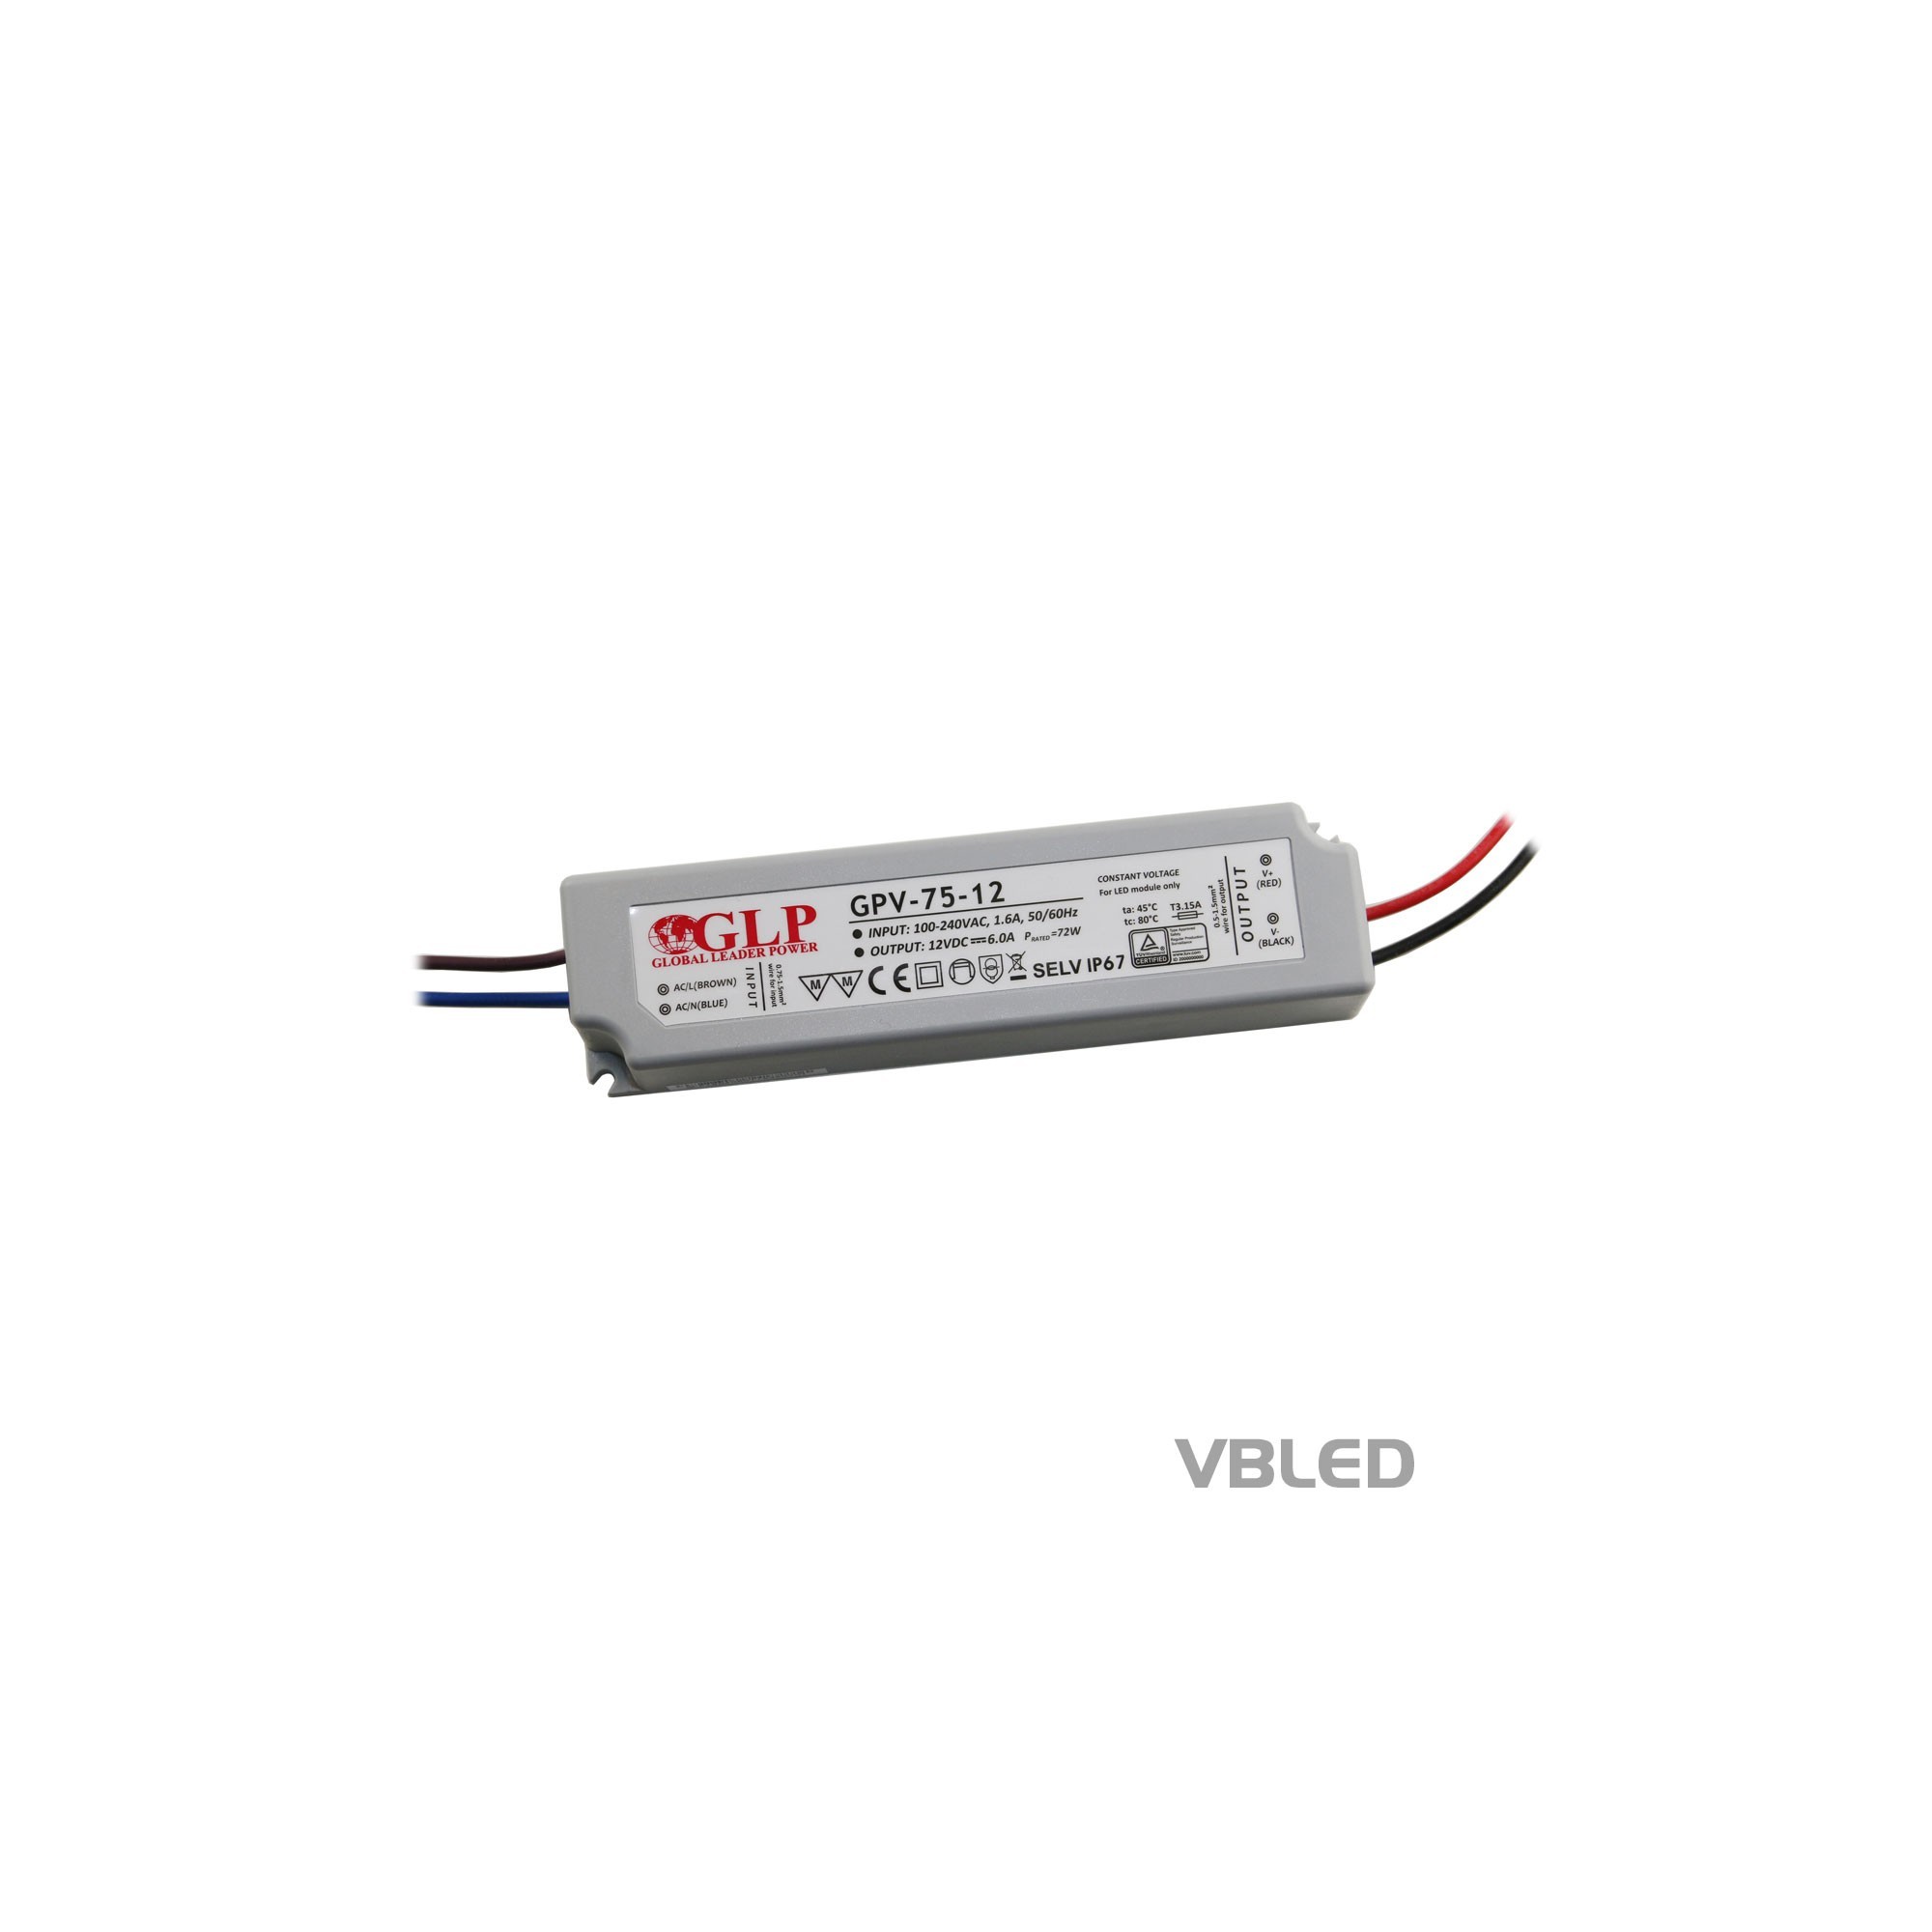 LED power supply unit constant voltage / 12V DC / 72W